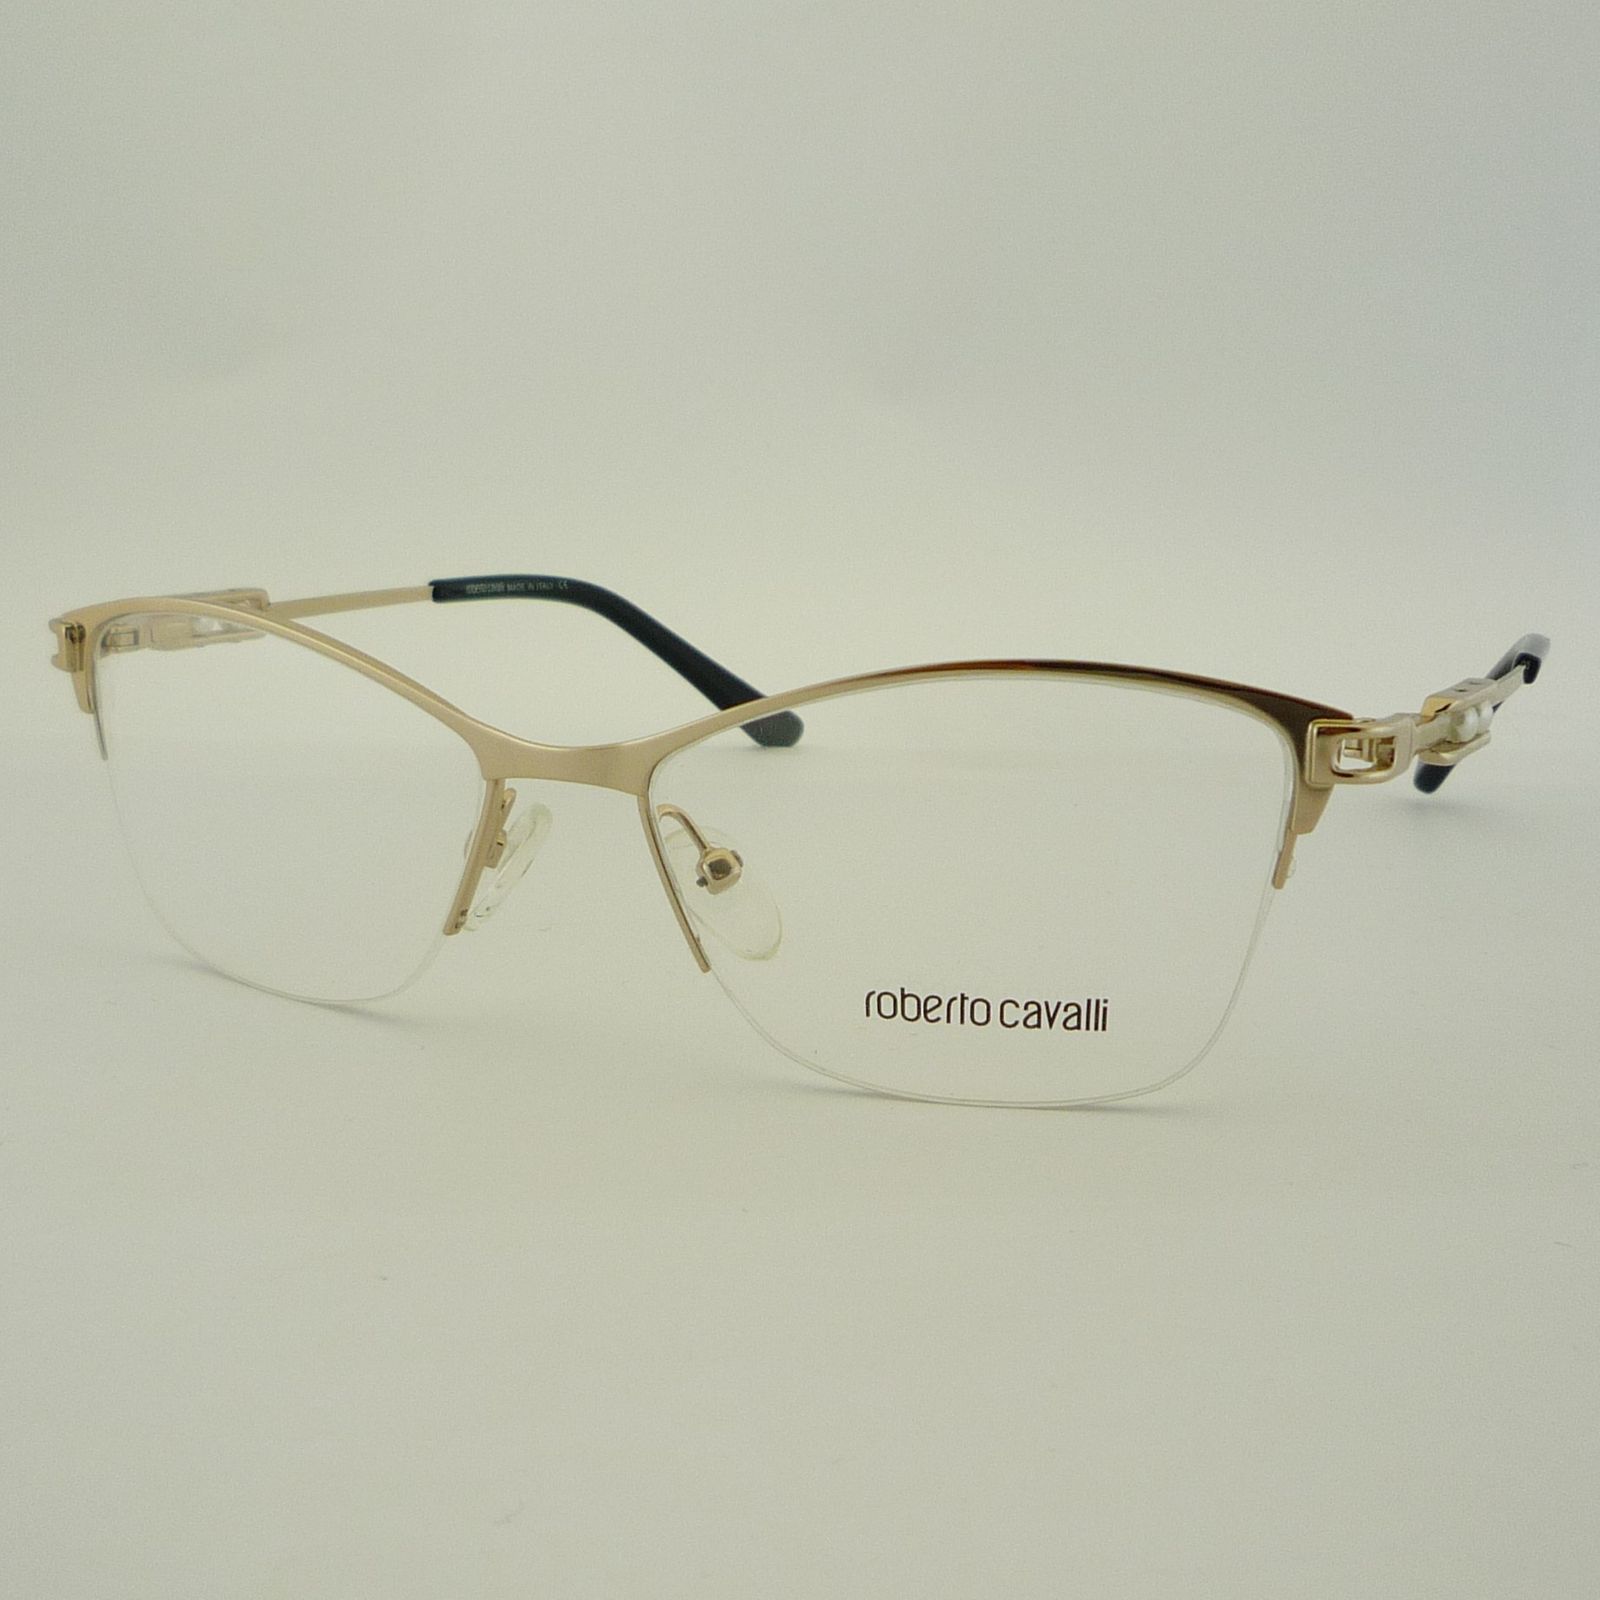 فریم عینک طبی زنانه روبرتو کاوالی مدل 45560187C1 -  - 3